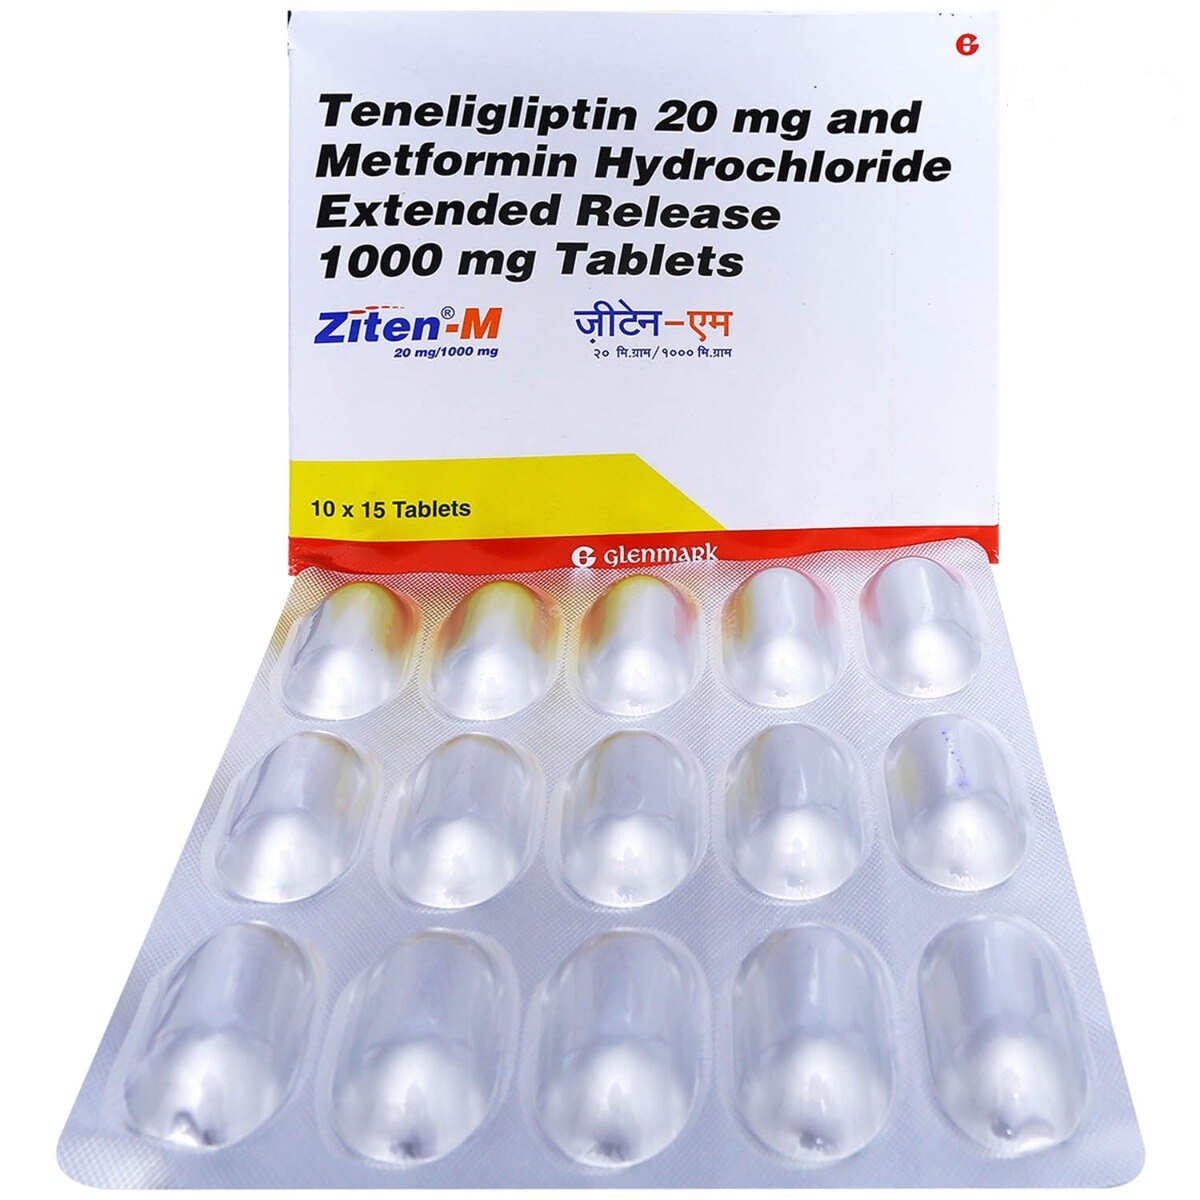 Positrarx Your Local Online Pharmacy Ziten M 1000 Mg Tablet